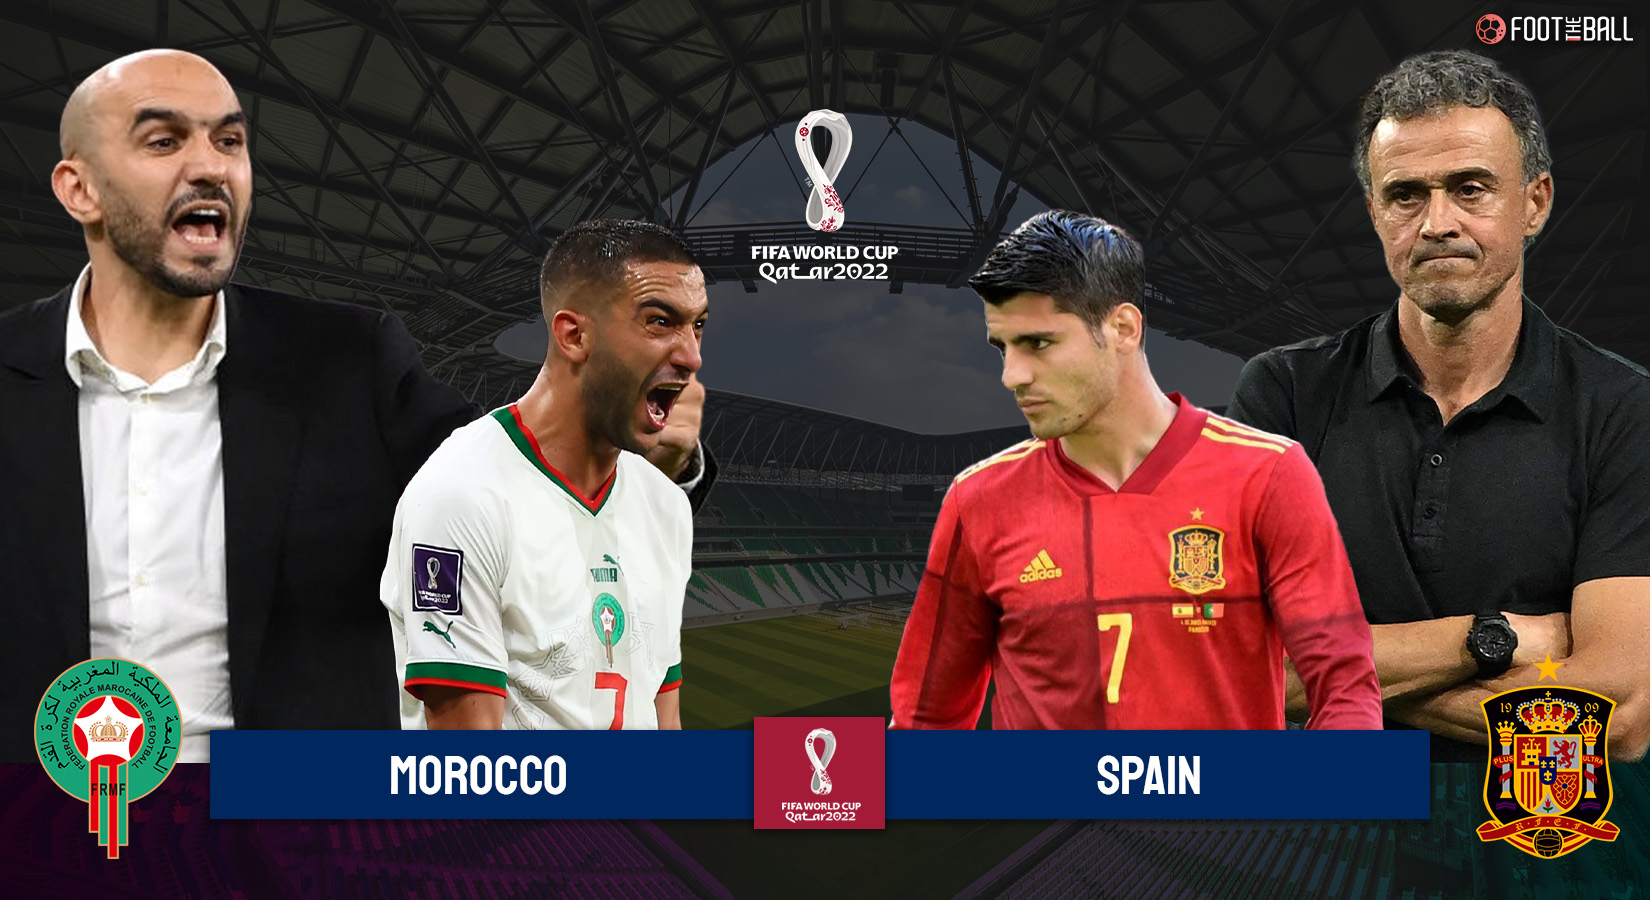 Morocco vs Spain match